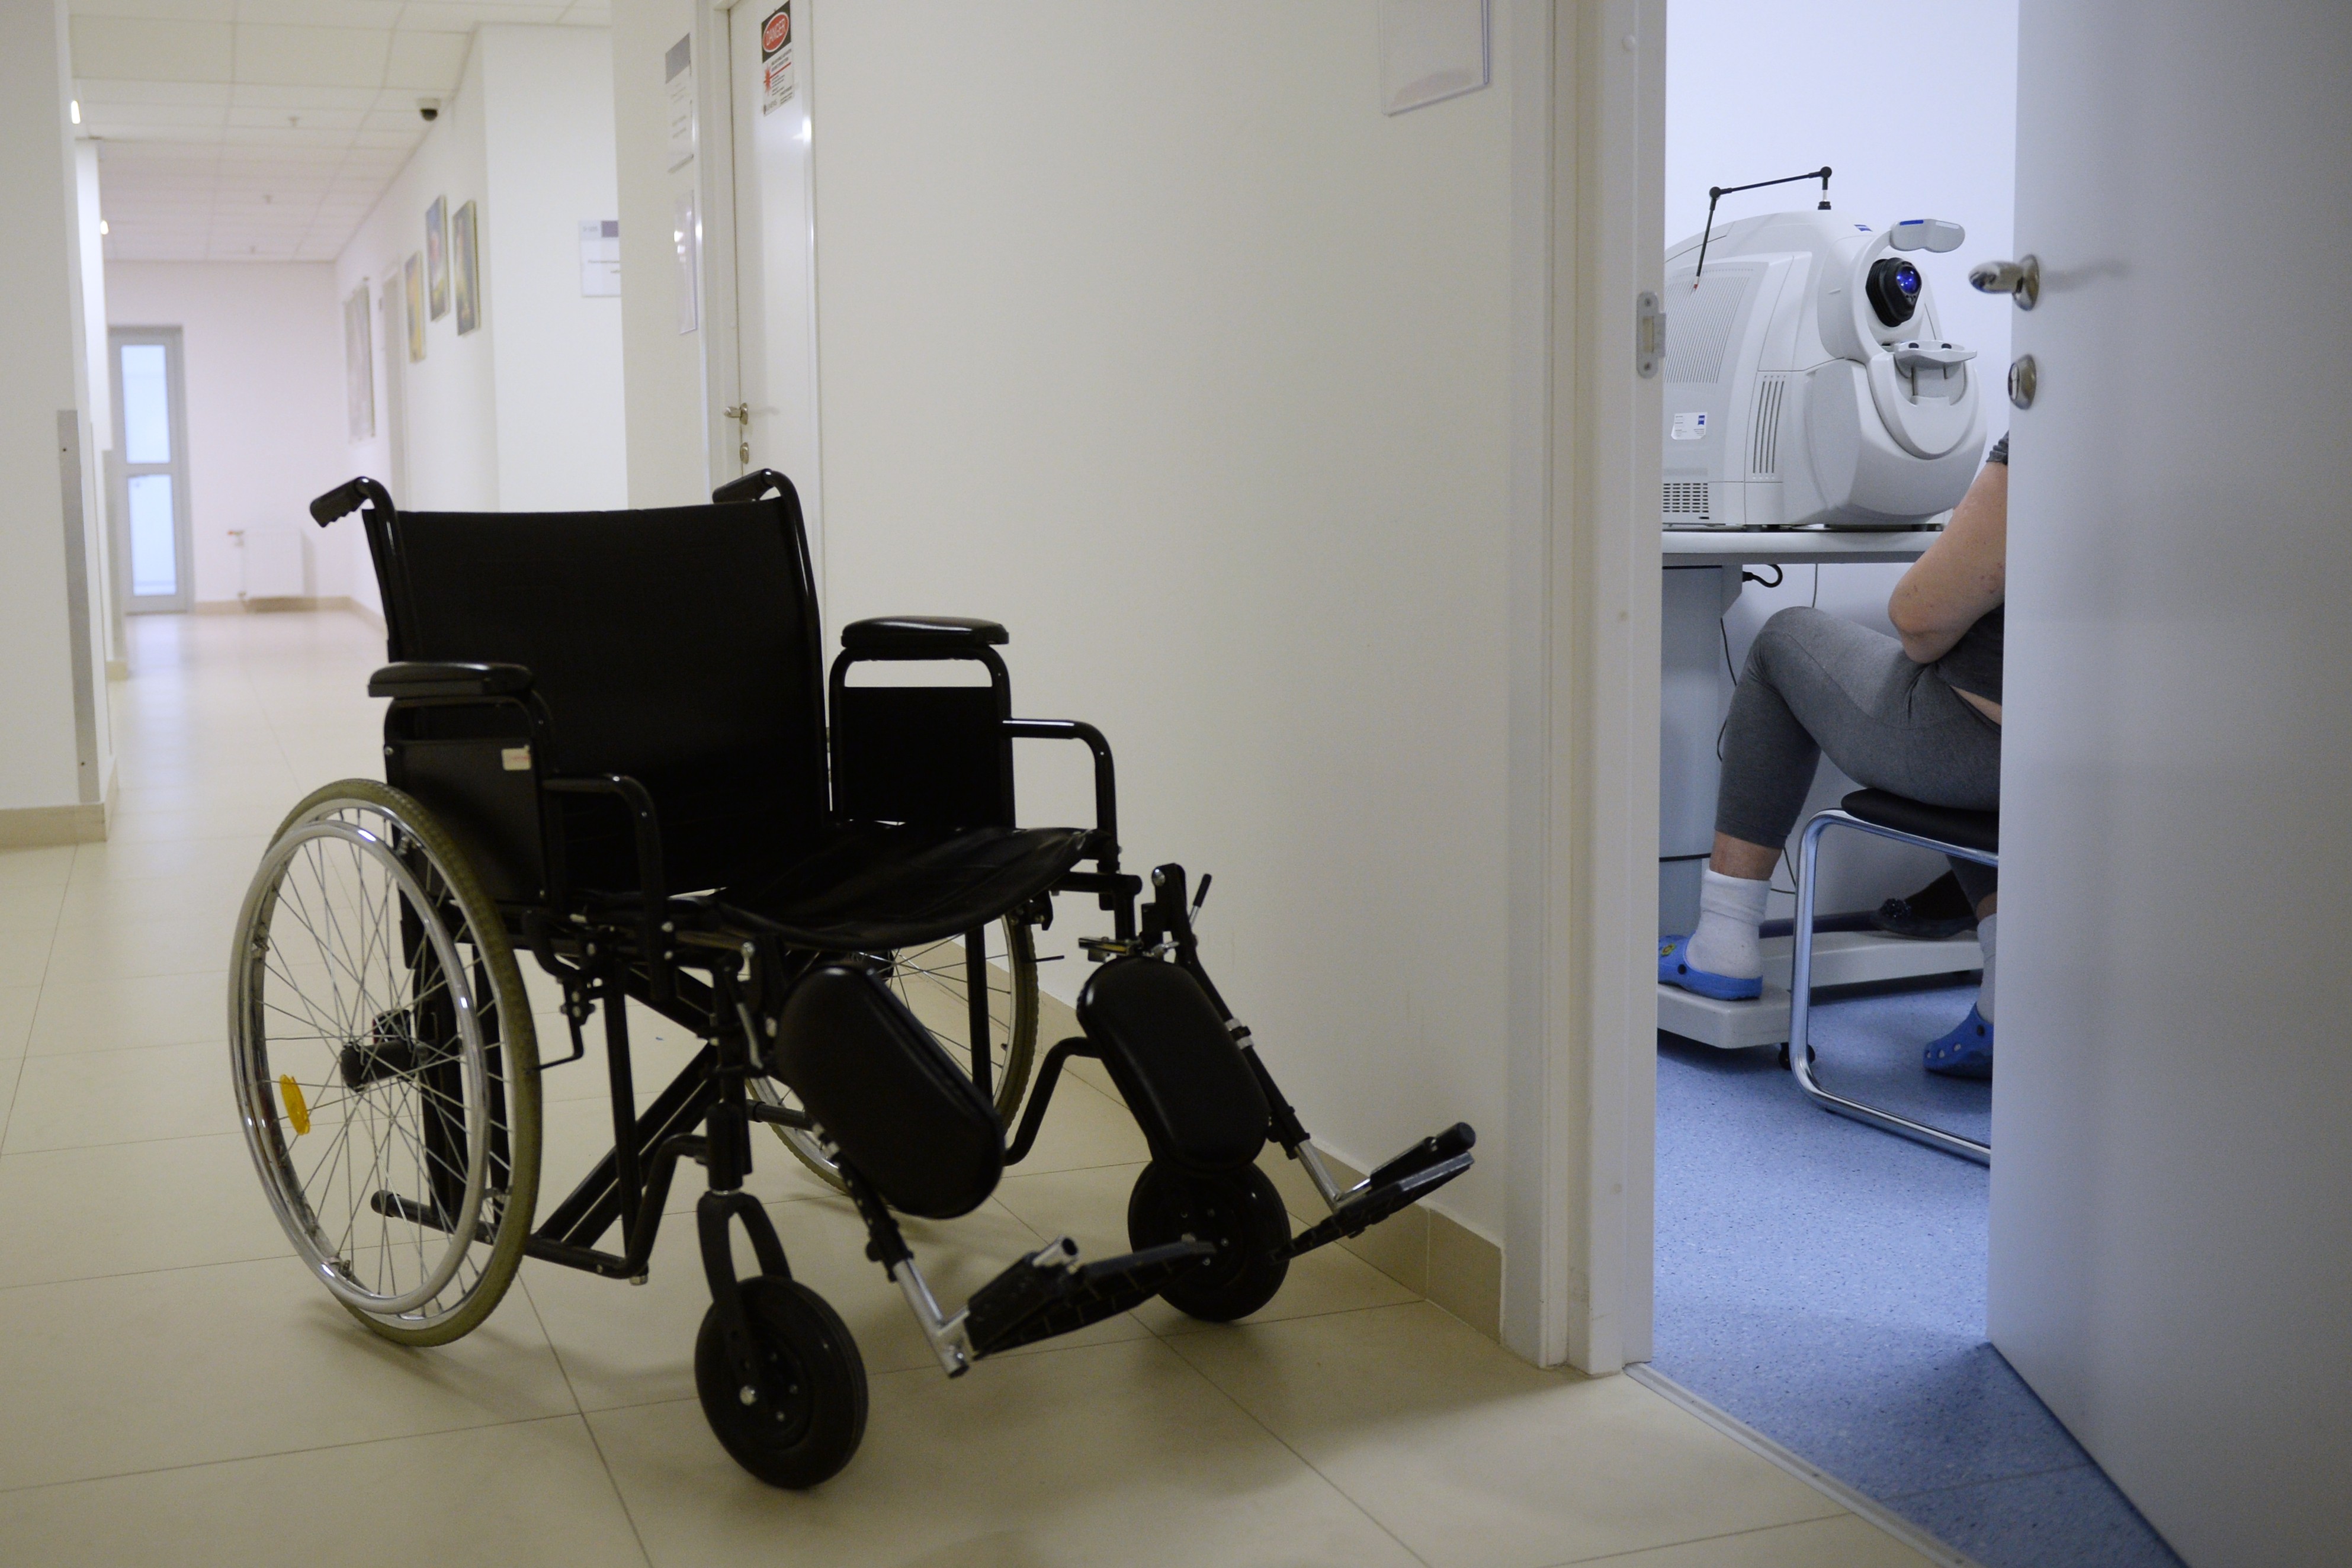 Упростили инвалидность. ДЦП колясочники. Коляска для инвалидов. Коляска детская для инвалидов в больнице. Инвалид на инвалидной коляске.